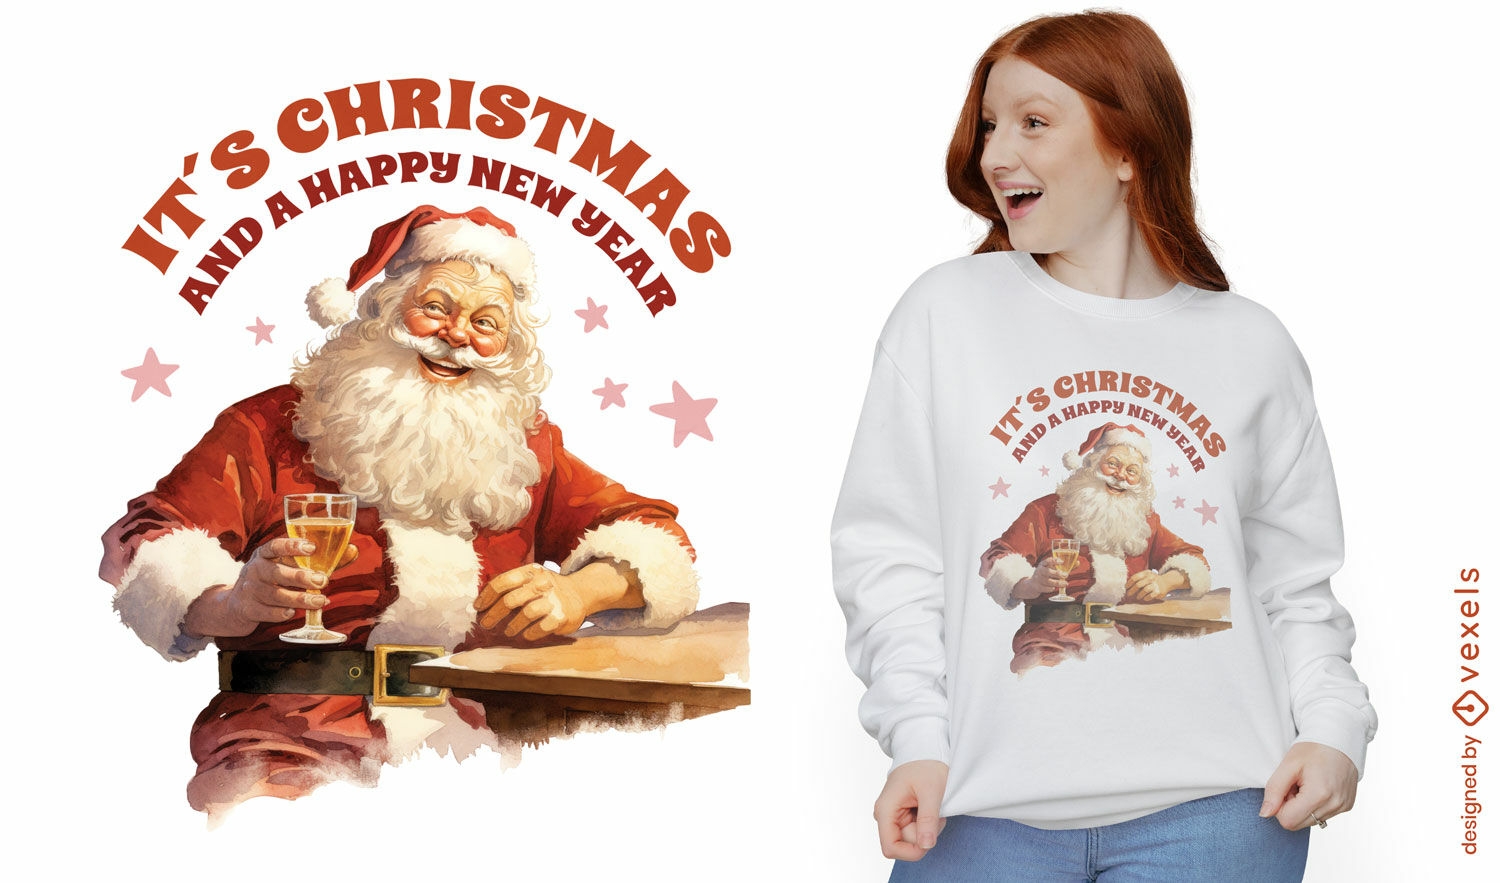 Jolly Santa Claus Christmas t-shirt design